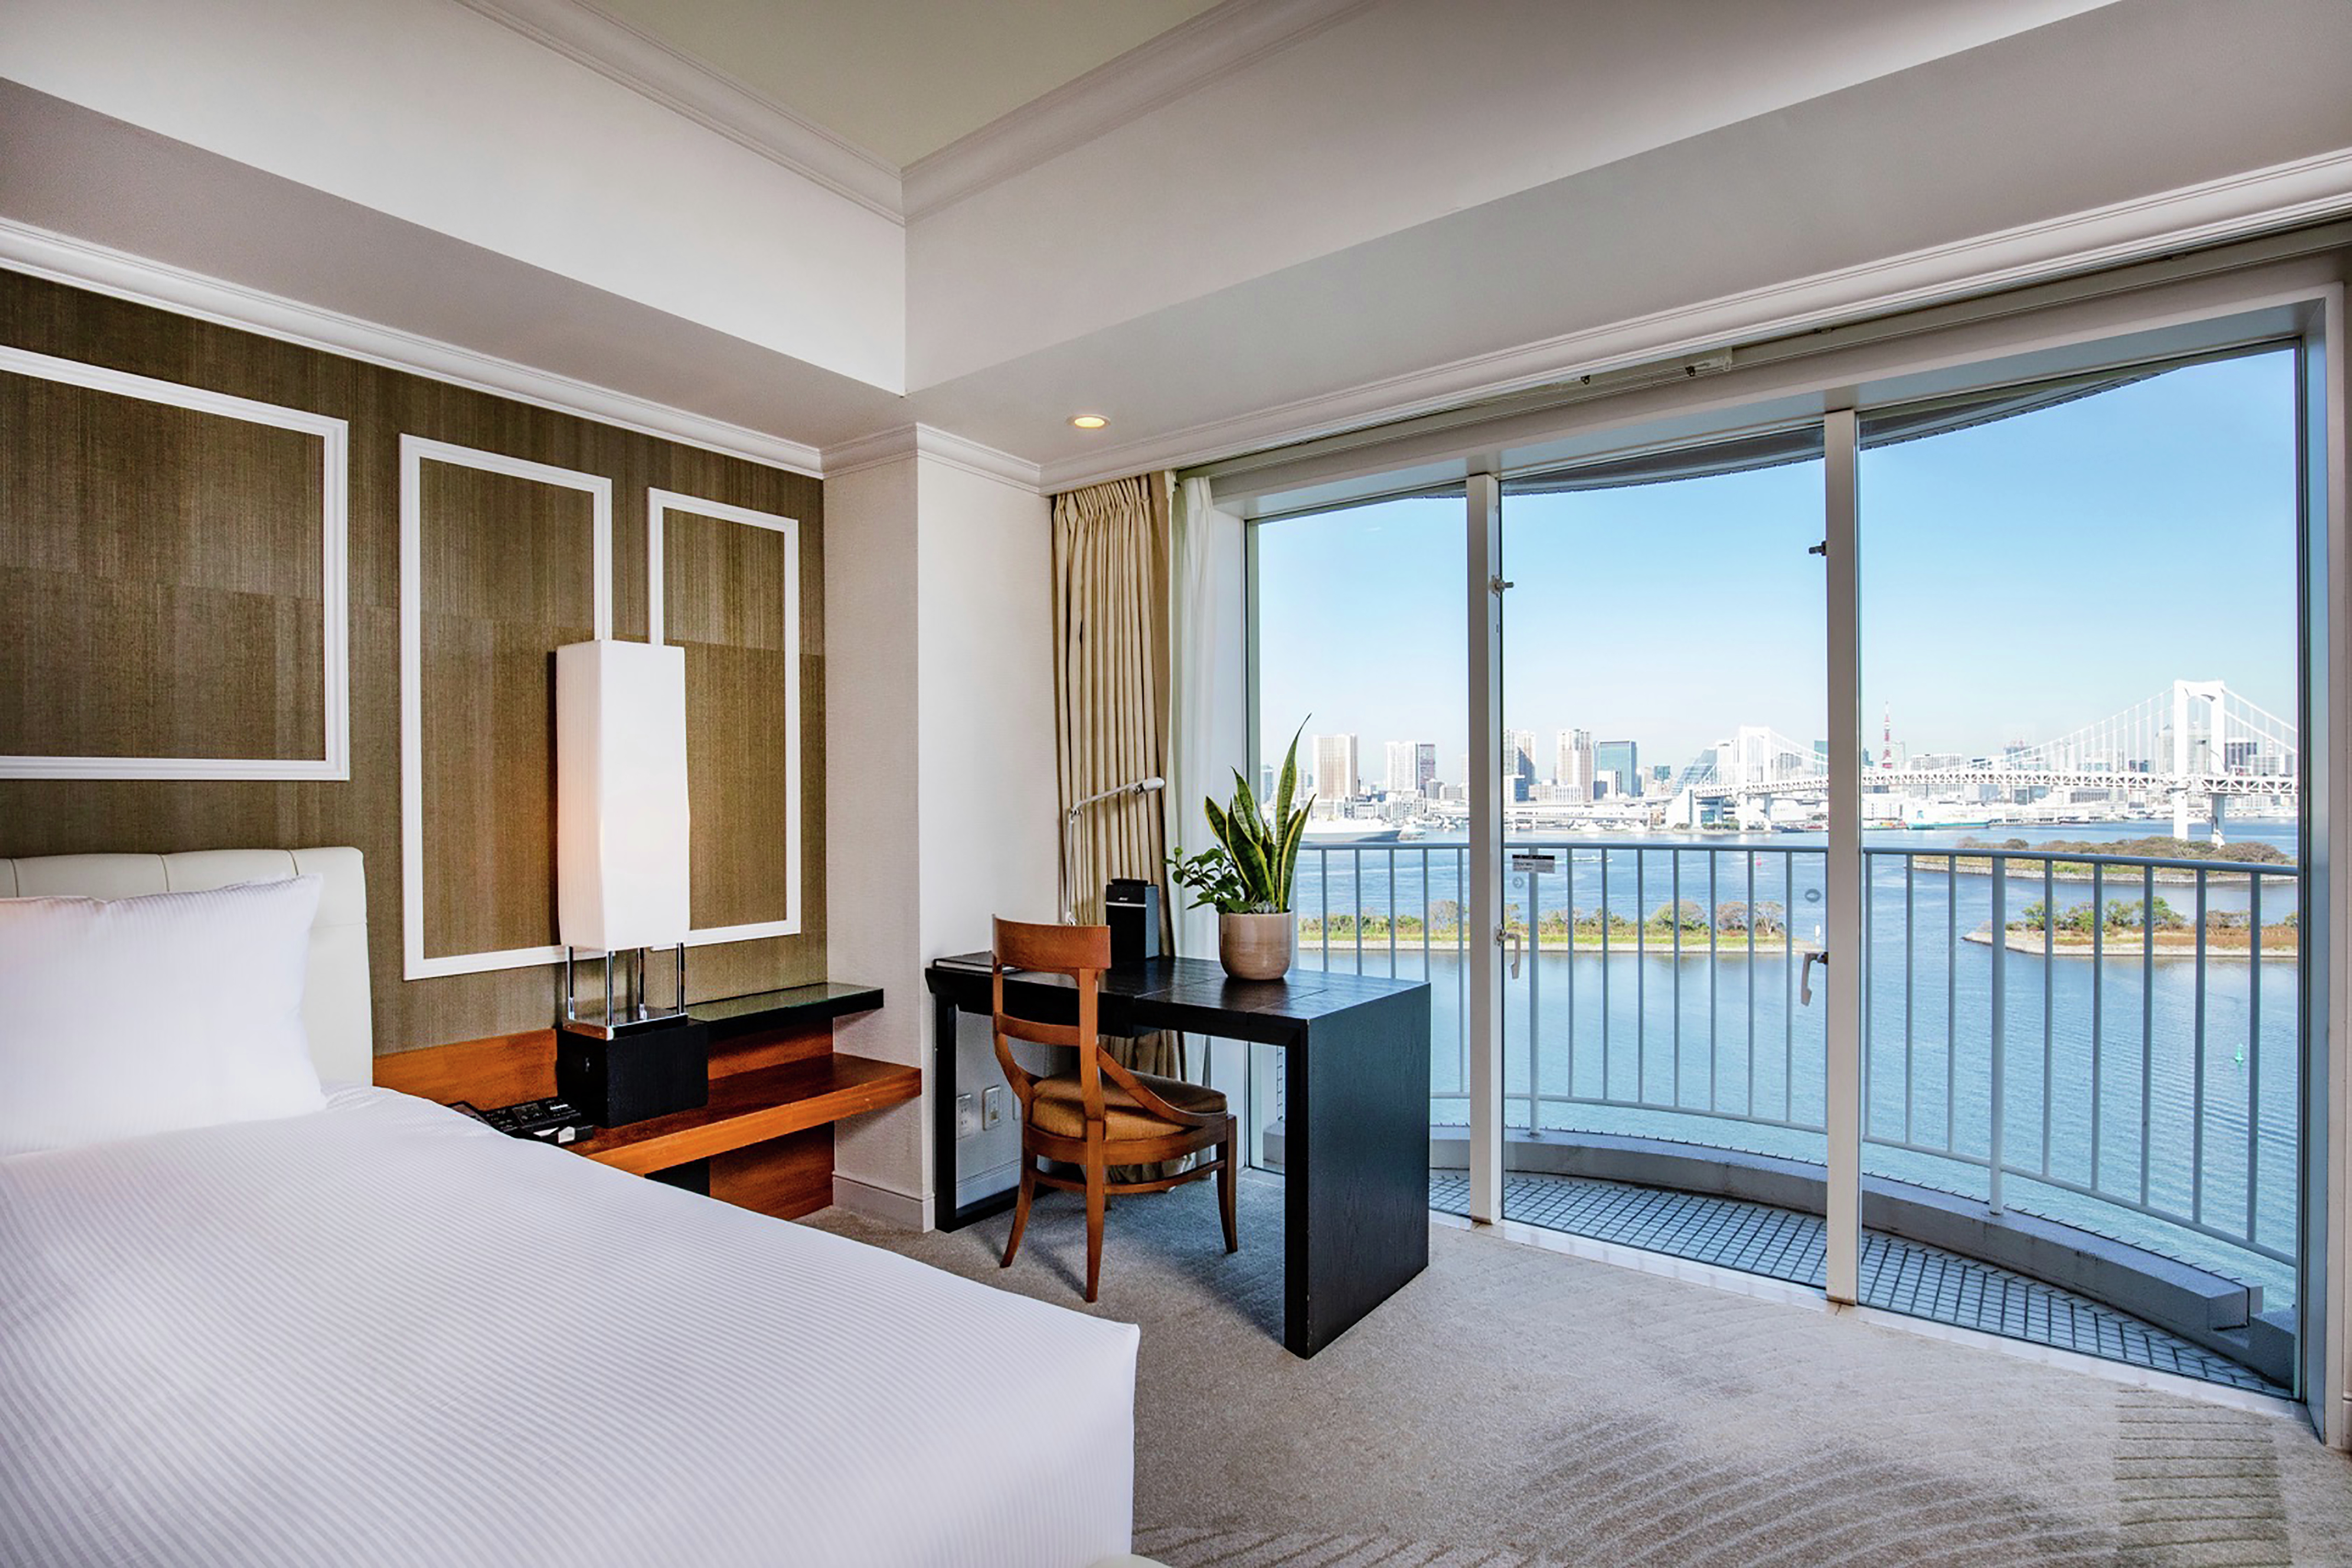 CLOUDY BAY  Cloudy Bay “Come Sail Away” lounge at Seascape Terrace in  Hilton Tokyo Odaiba.